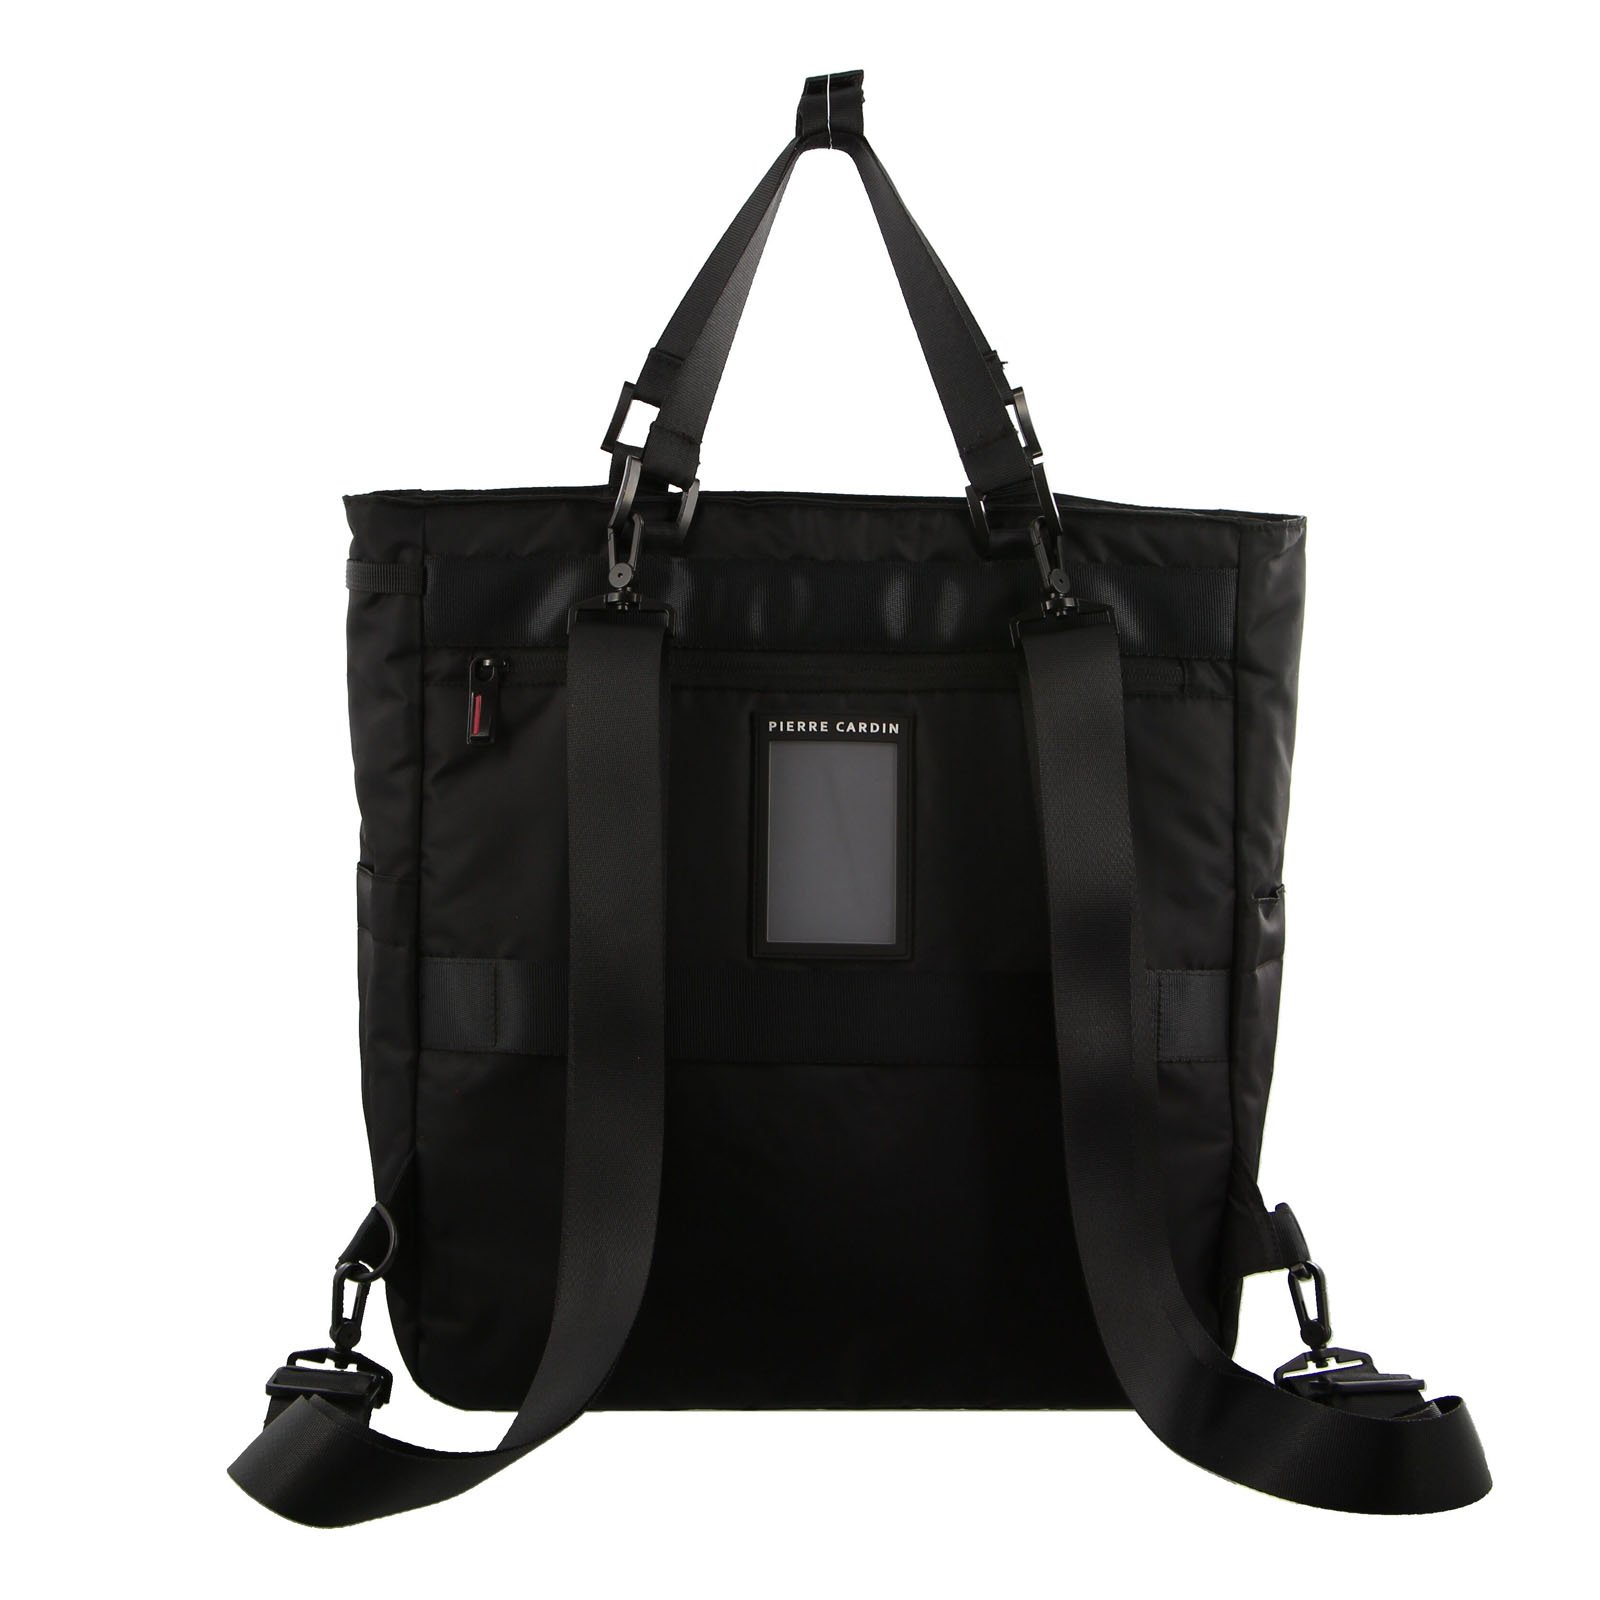 Pierre Cardin Nylon RFID Protected Tote Backpack Travel Bag - Black